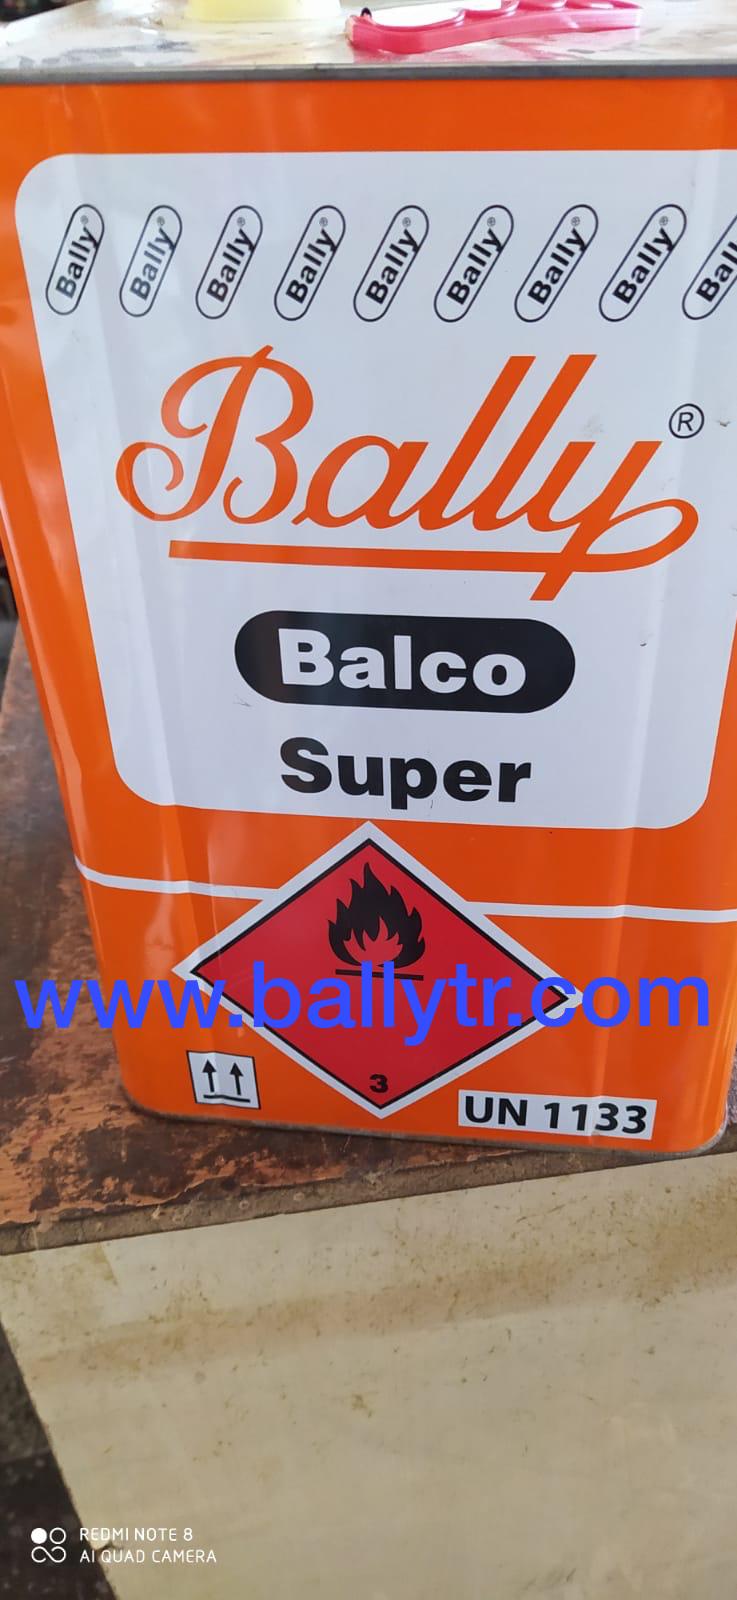 Bally Balco Super Adhesive